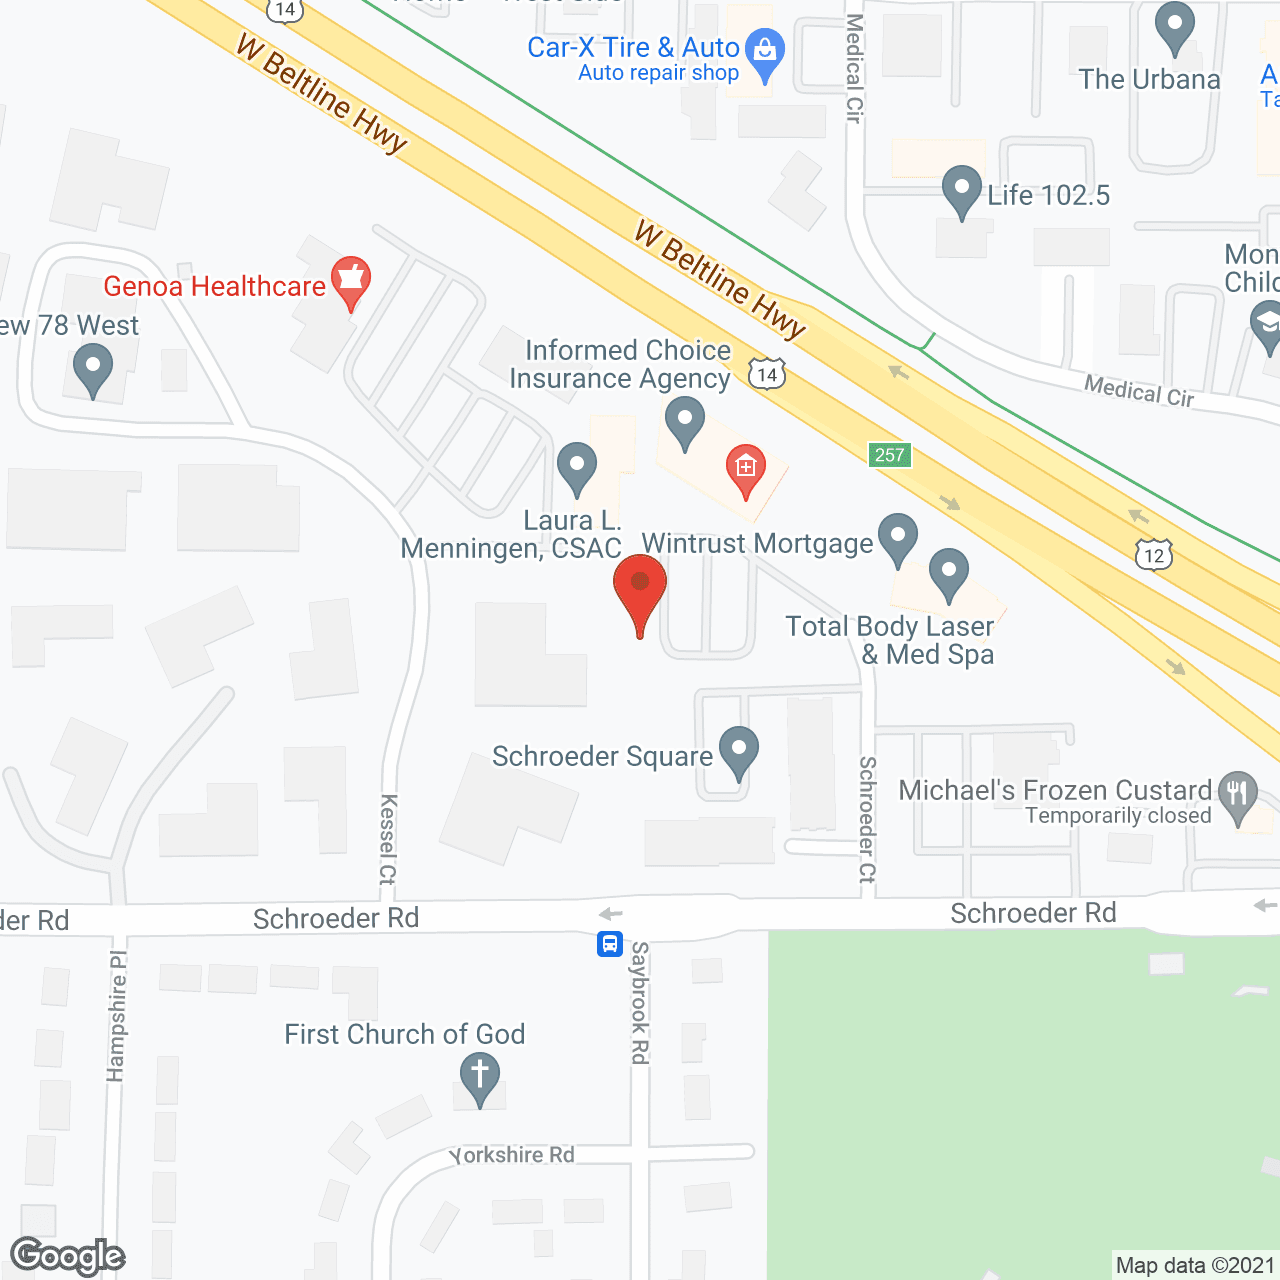 Wellington Circle Apartments in google map